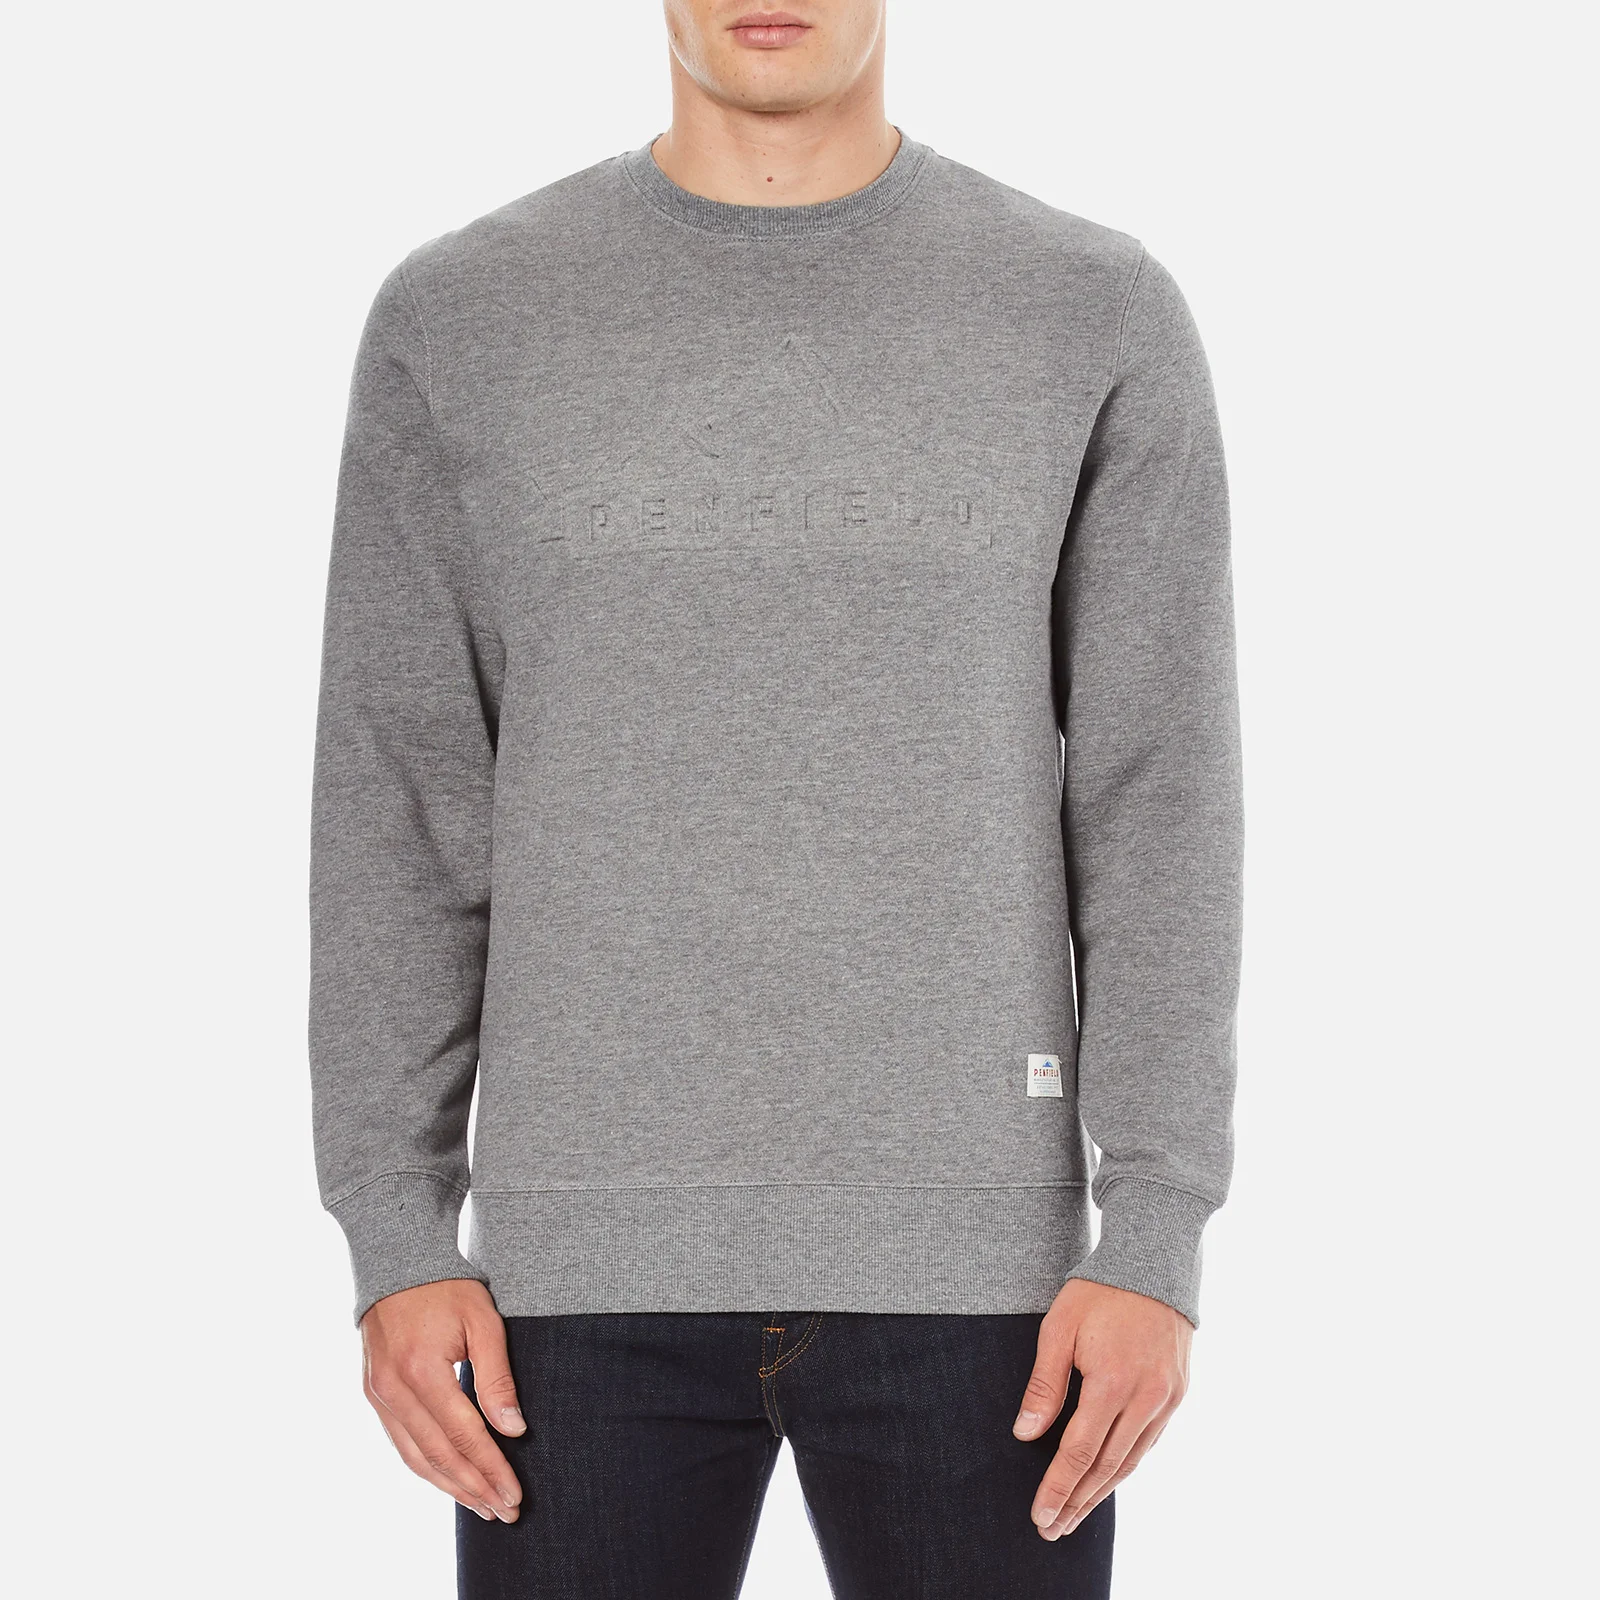 Penfield Men's Farley Sweatshirt - Grey Image 1